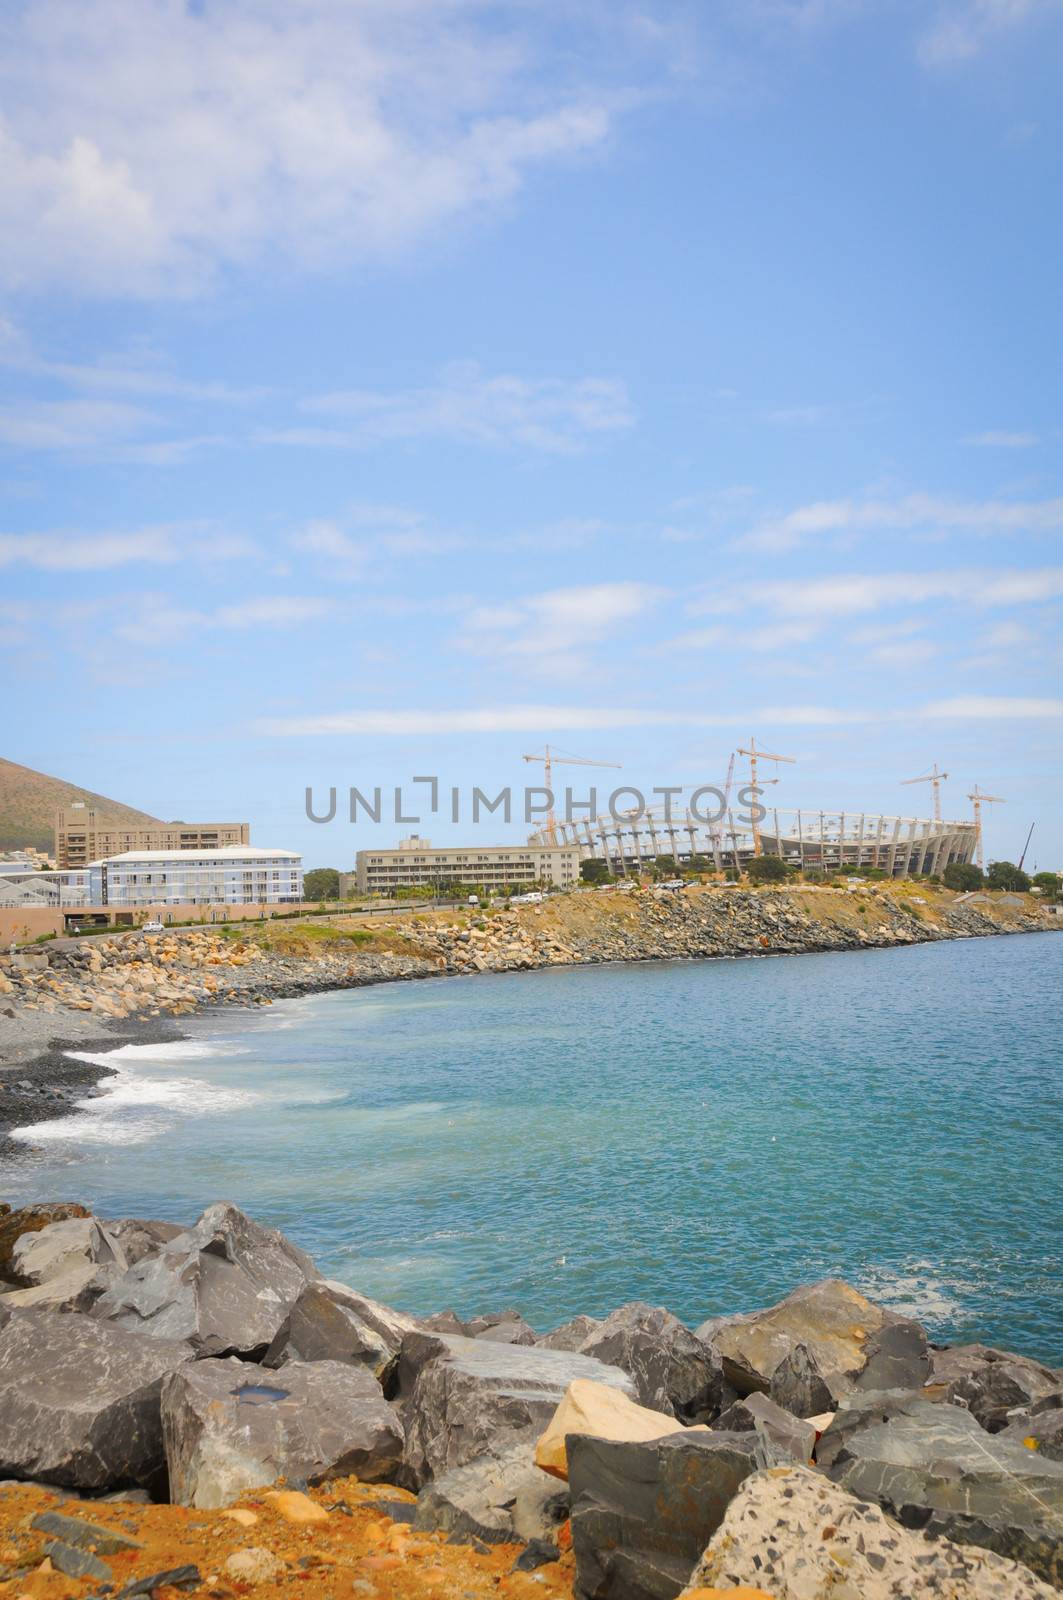 Stadium construcation on blue sea shore by iryna_rasko